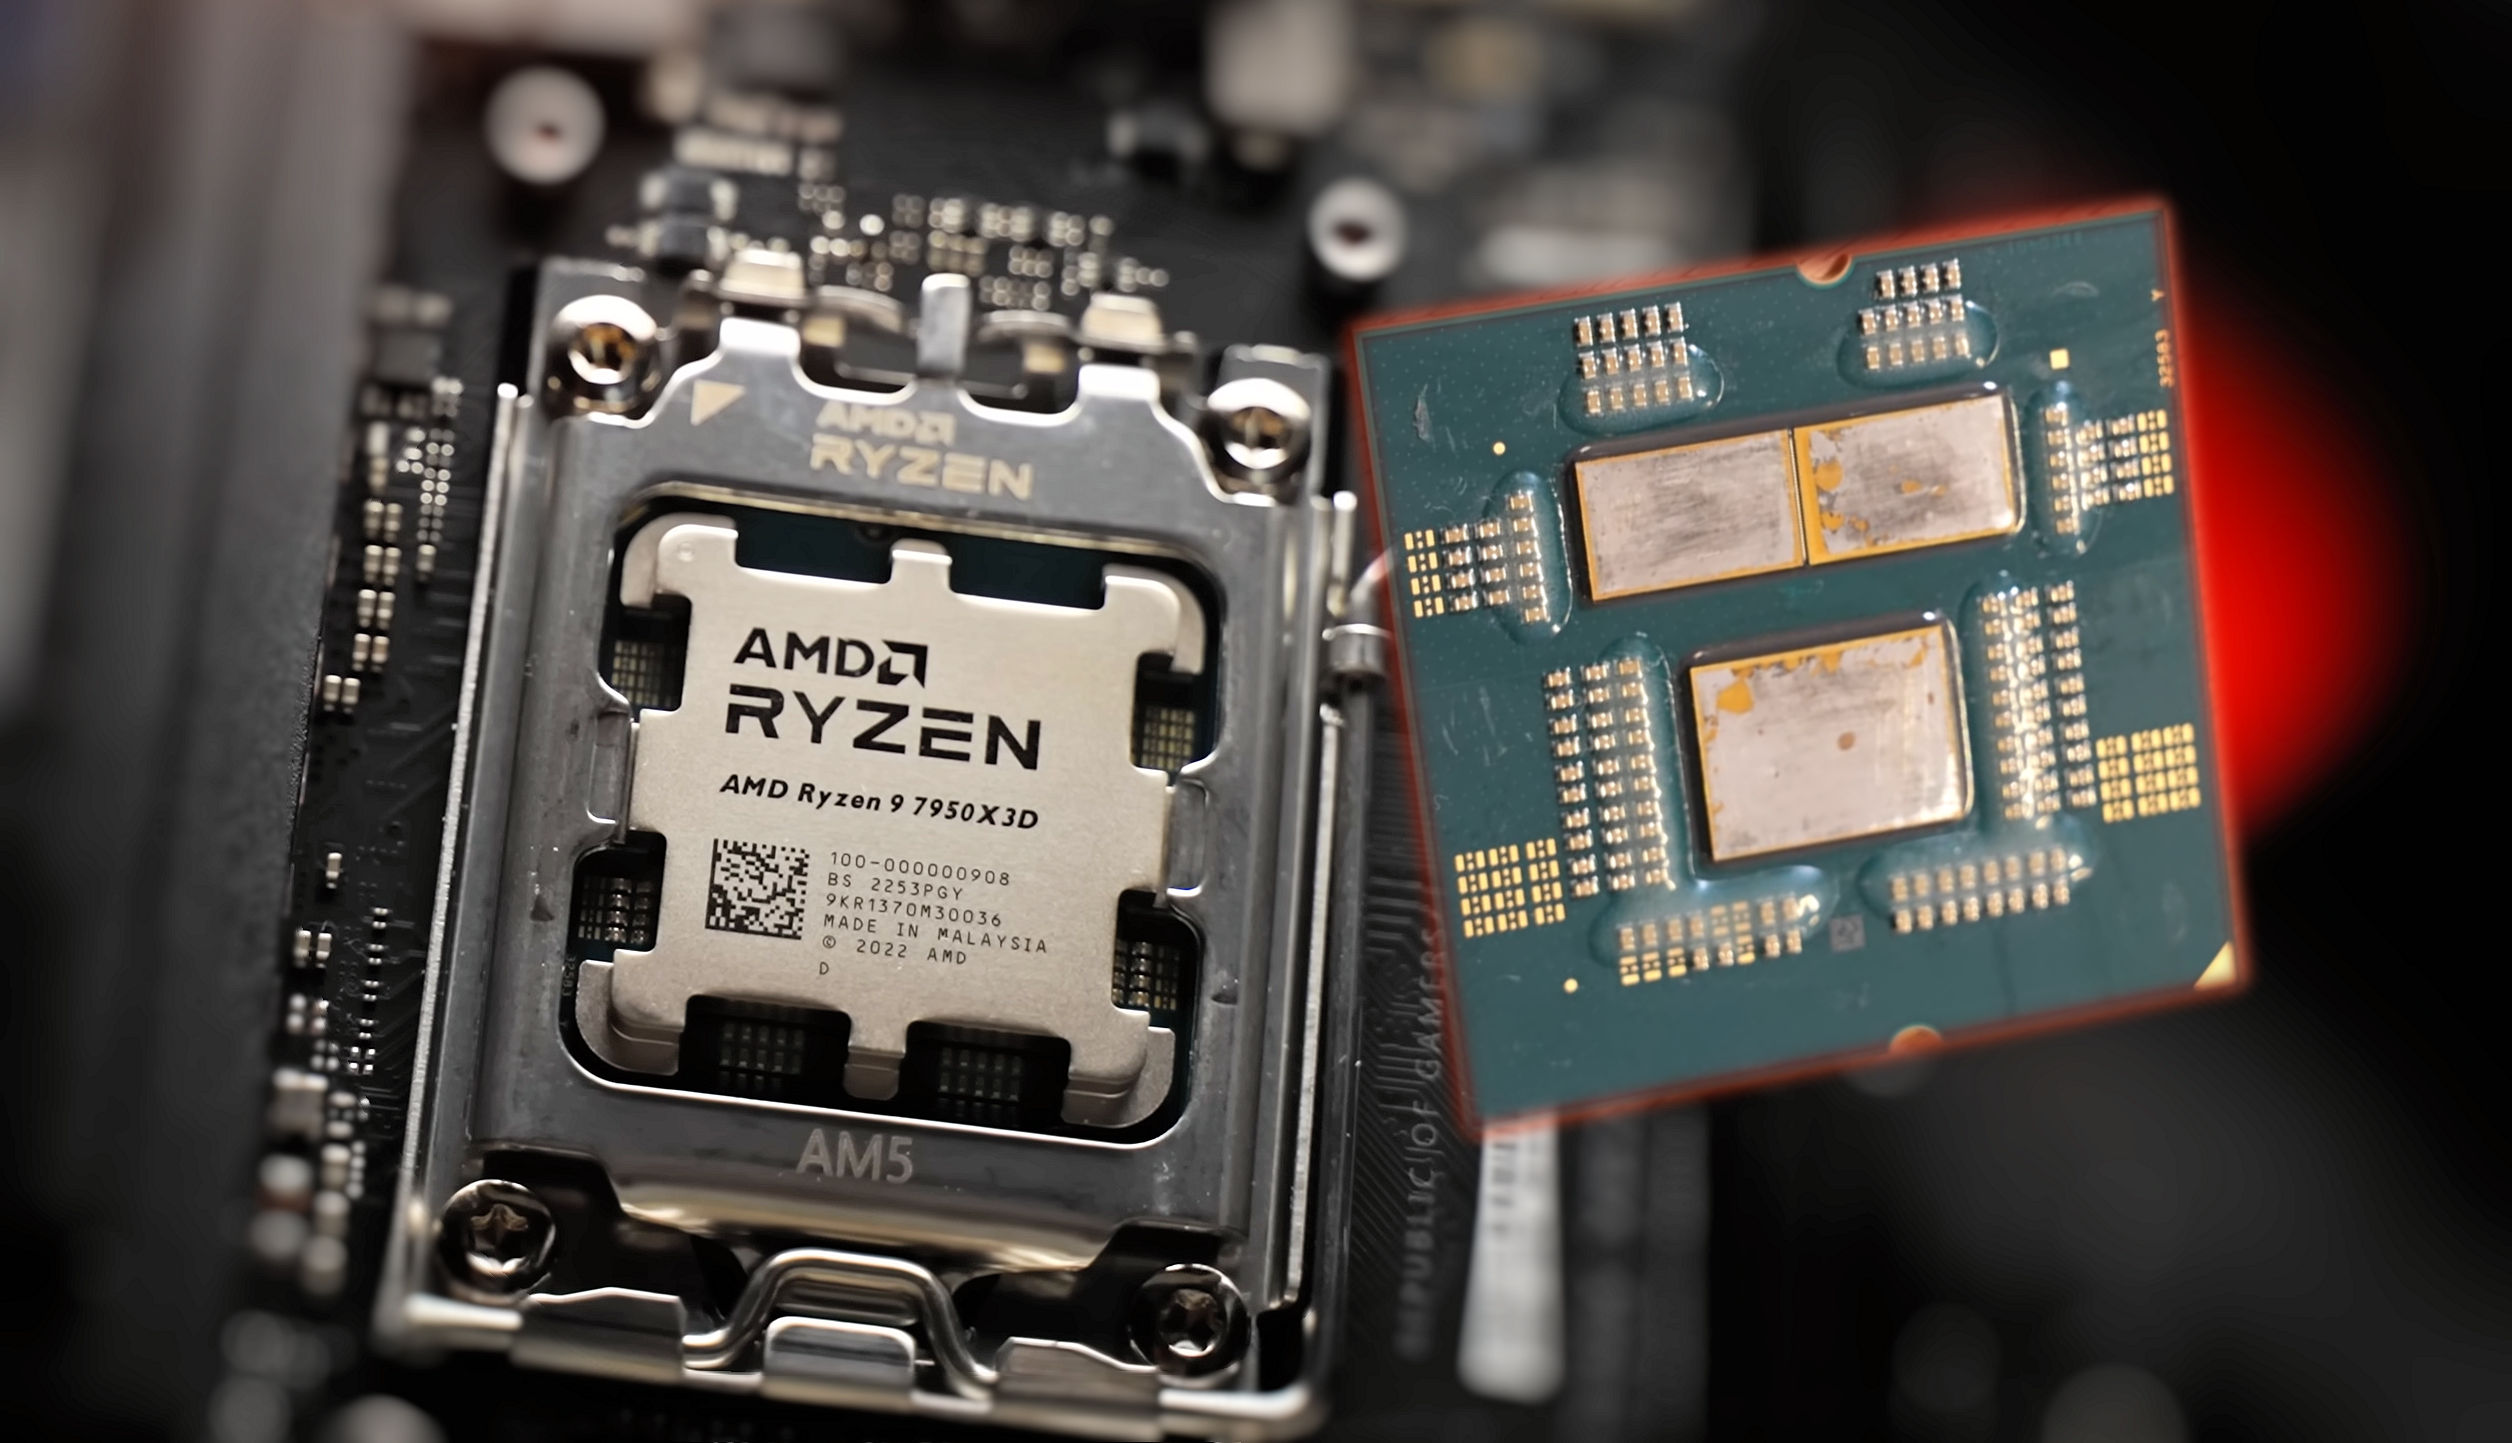 Ryzen 9 7950X 3D - It is arriving sooner than you think! 